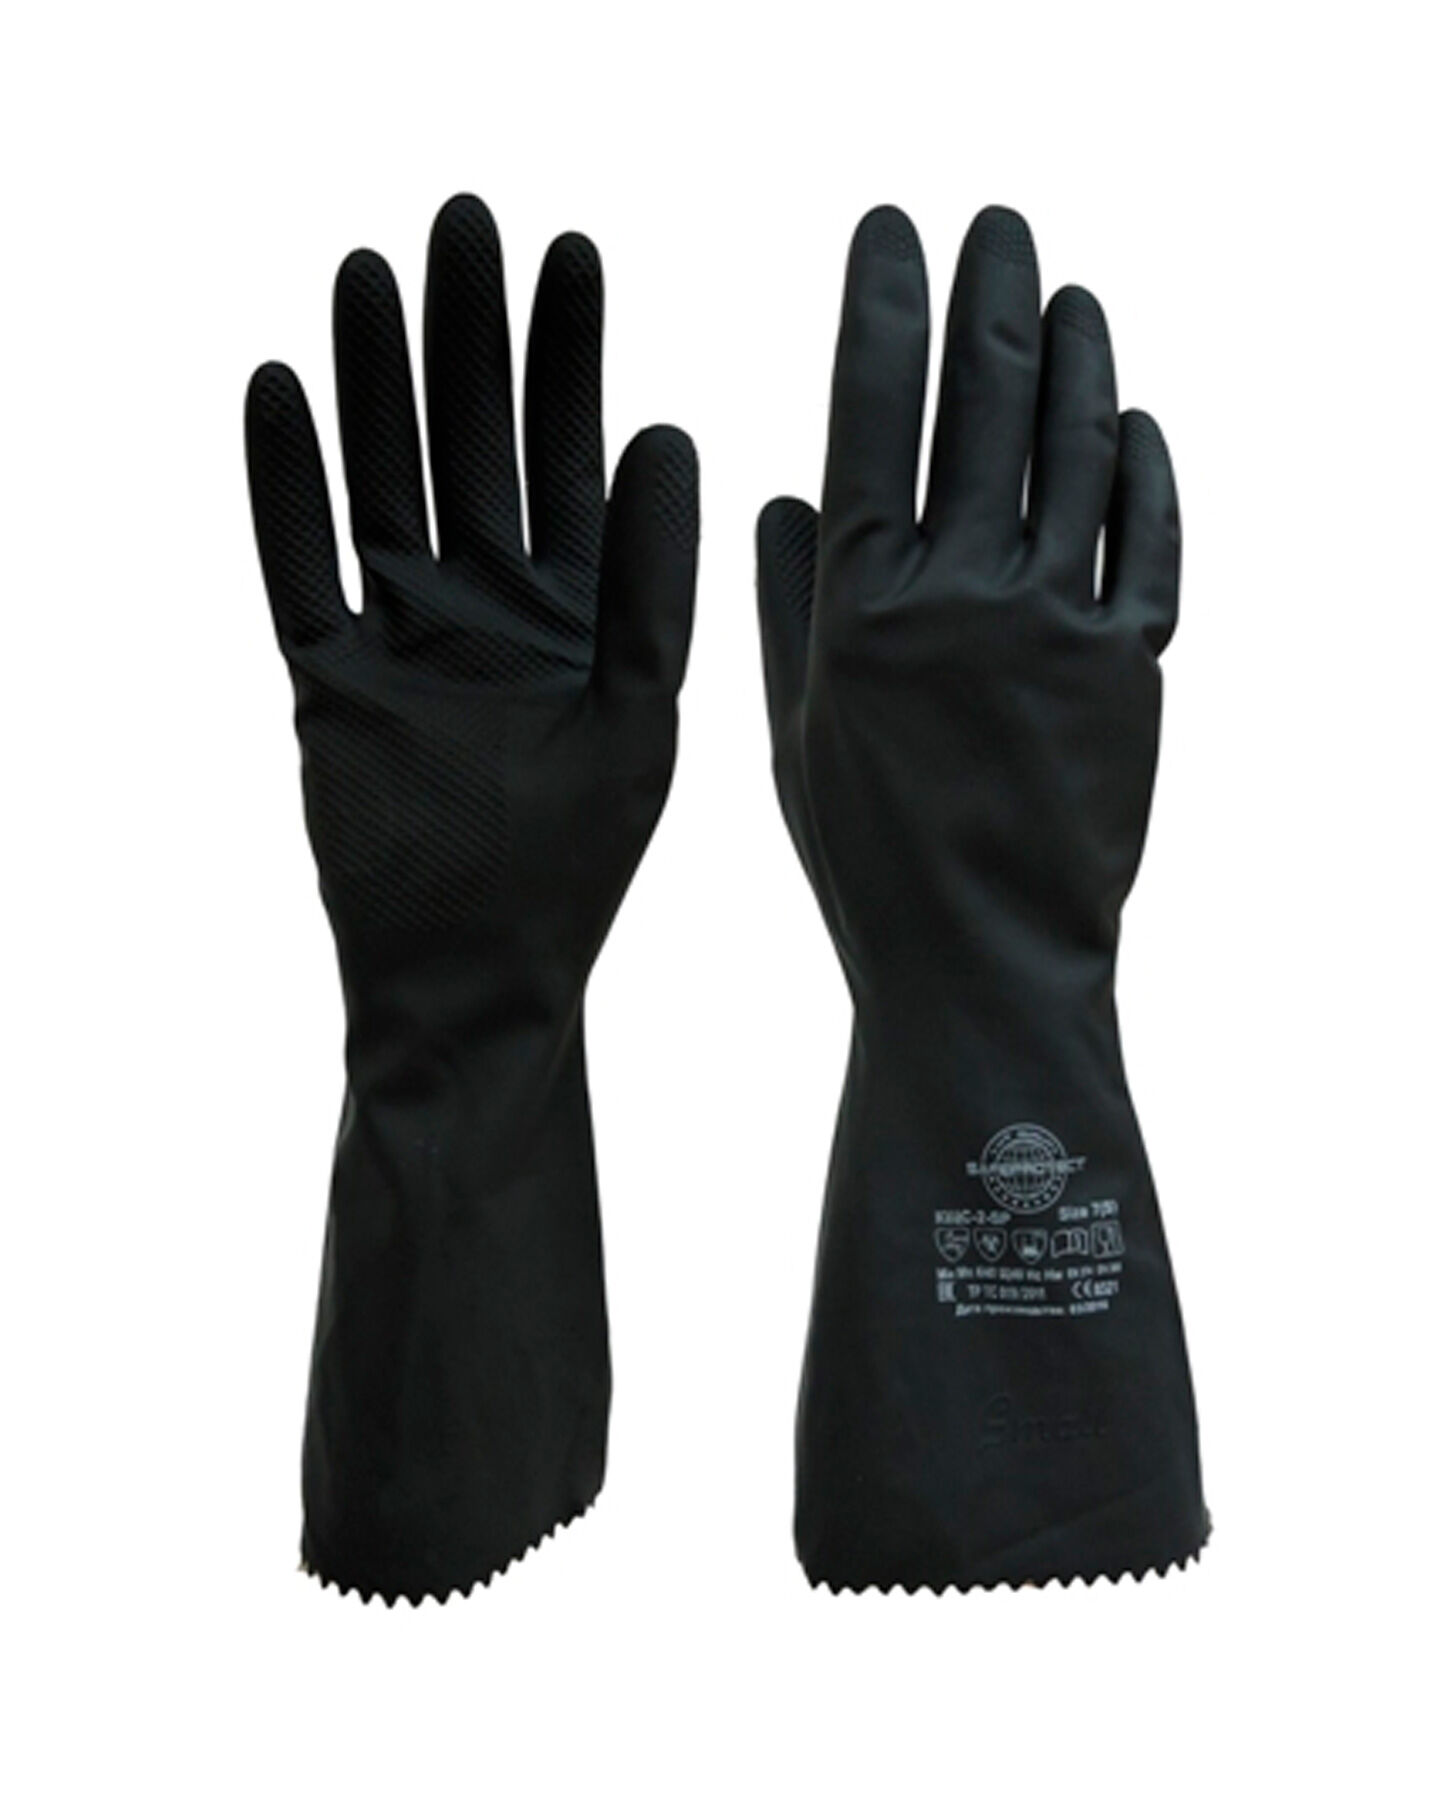 Перчатки Safeprotect КЩС-2-SP (латекс, толщина 0,35 мм, дл.300мм)